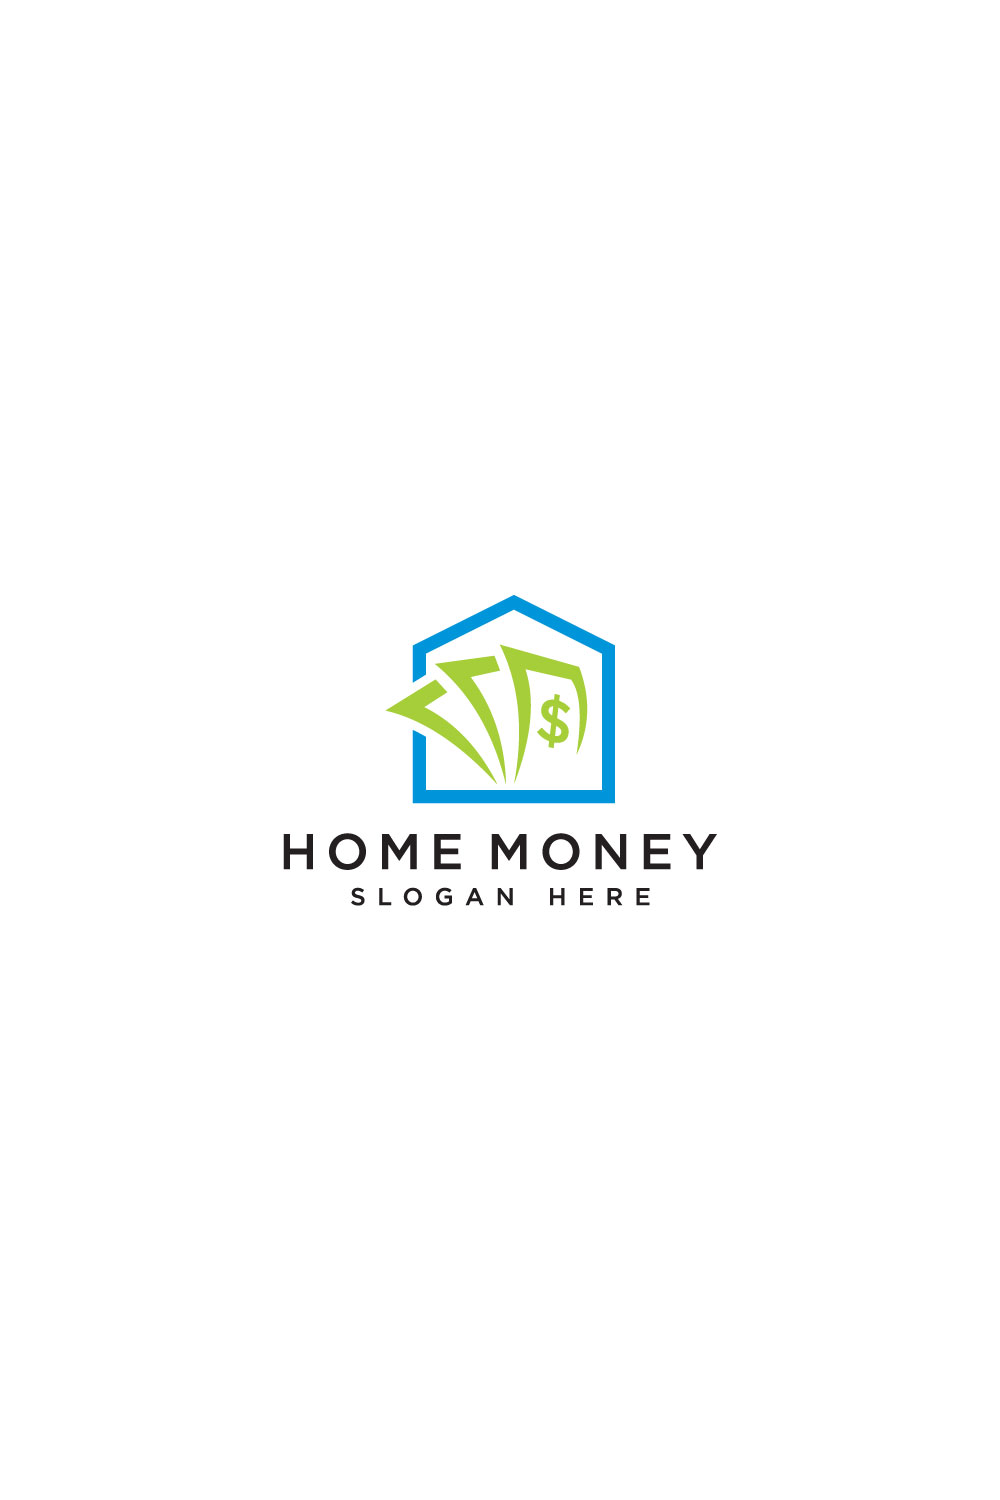 Home Money Logo Vector Design Pinterest.